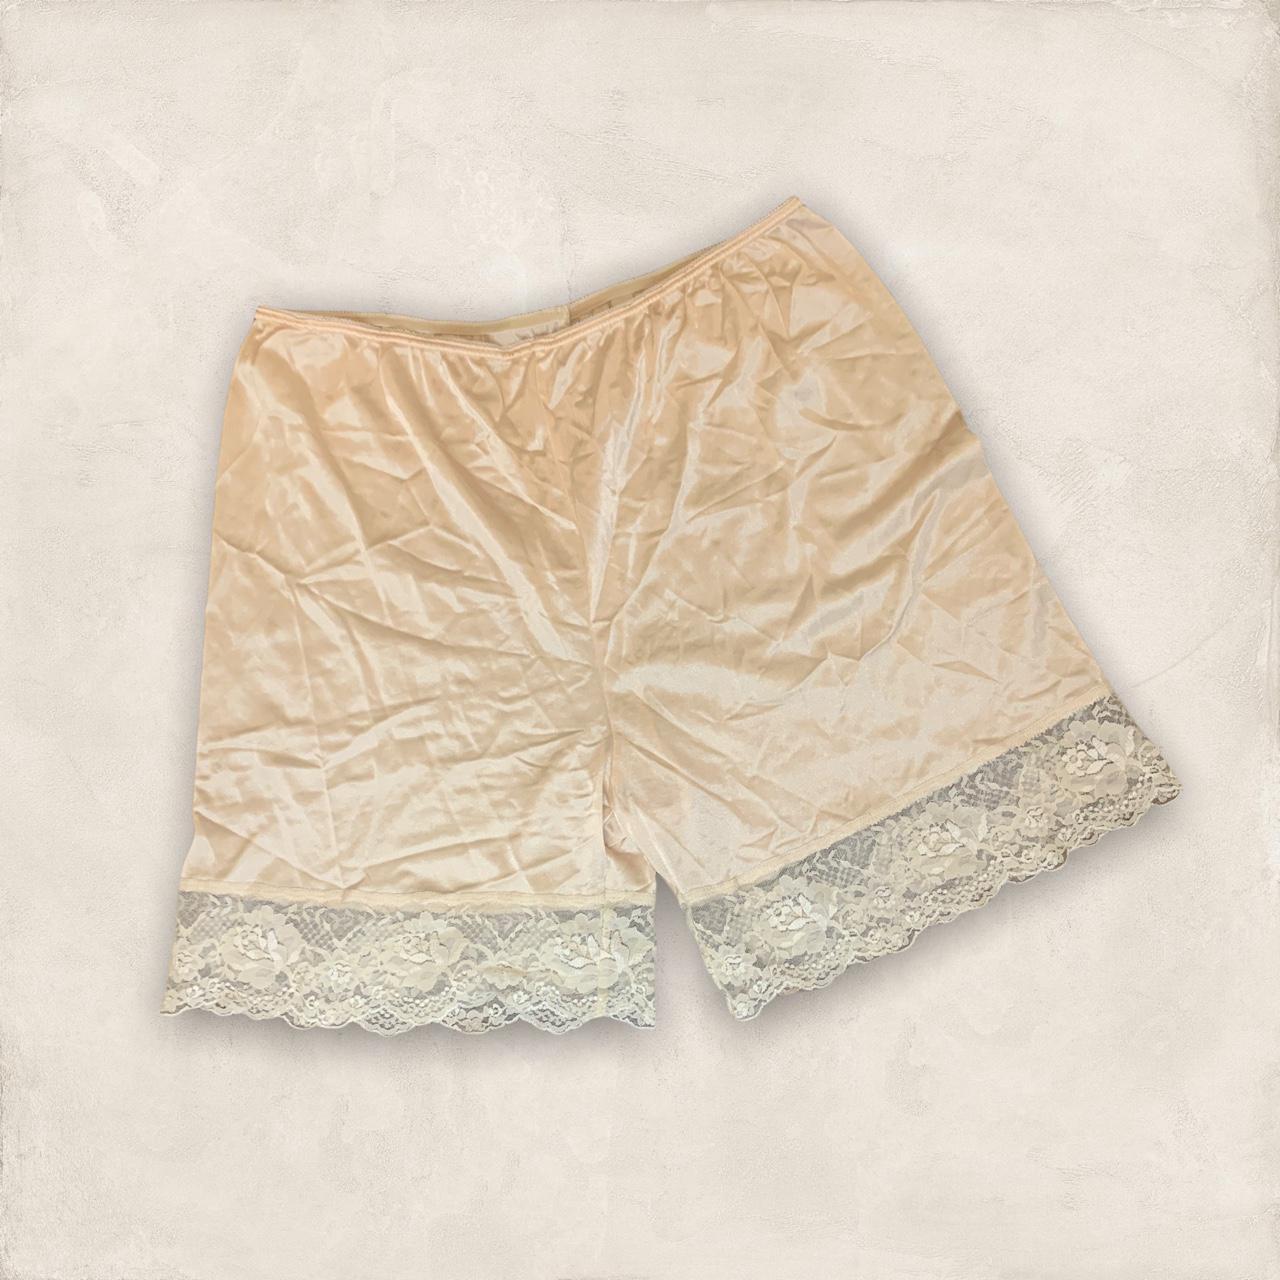 Product Image 1 - Cream Bloomer Slip Shorts 
Measurements: